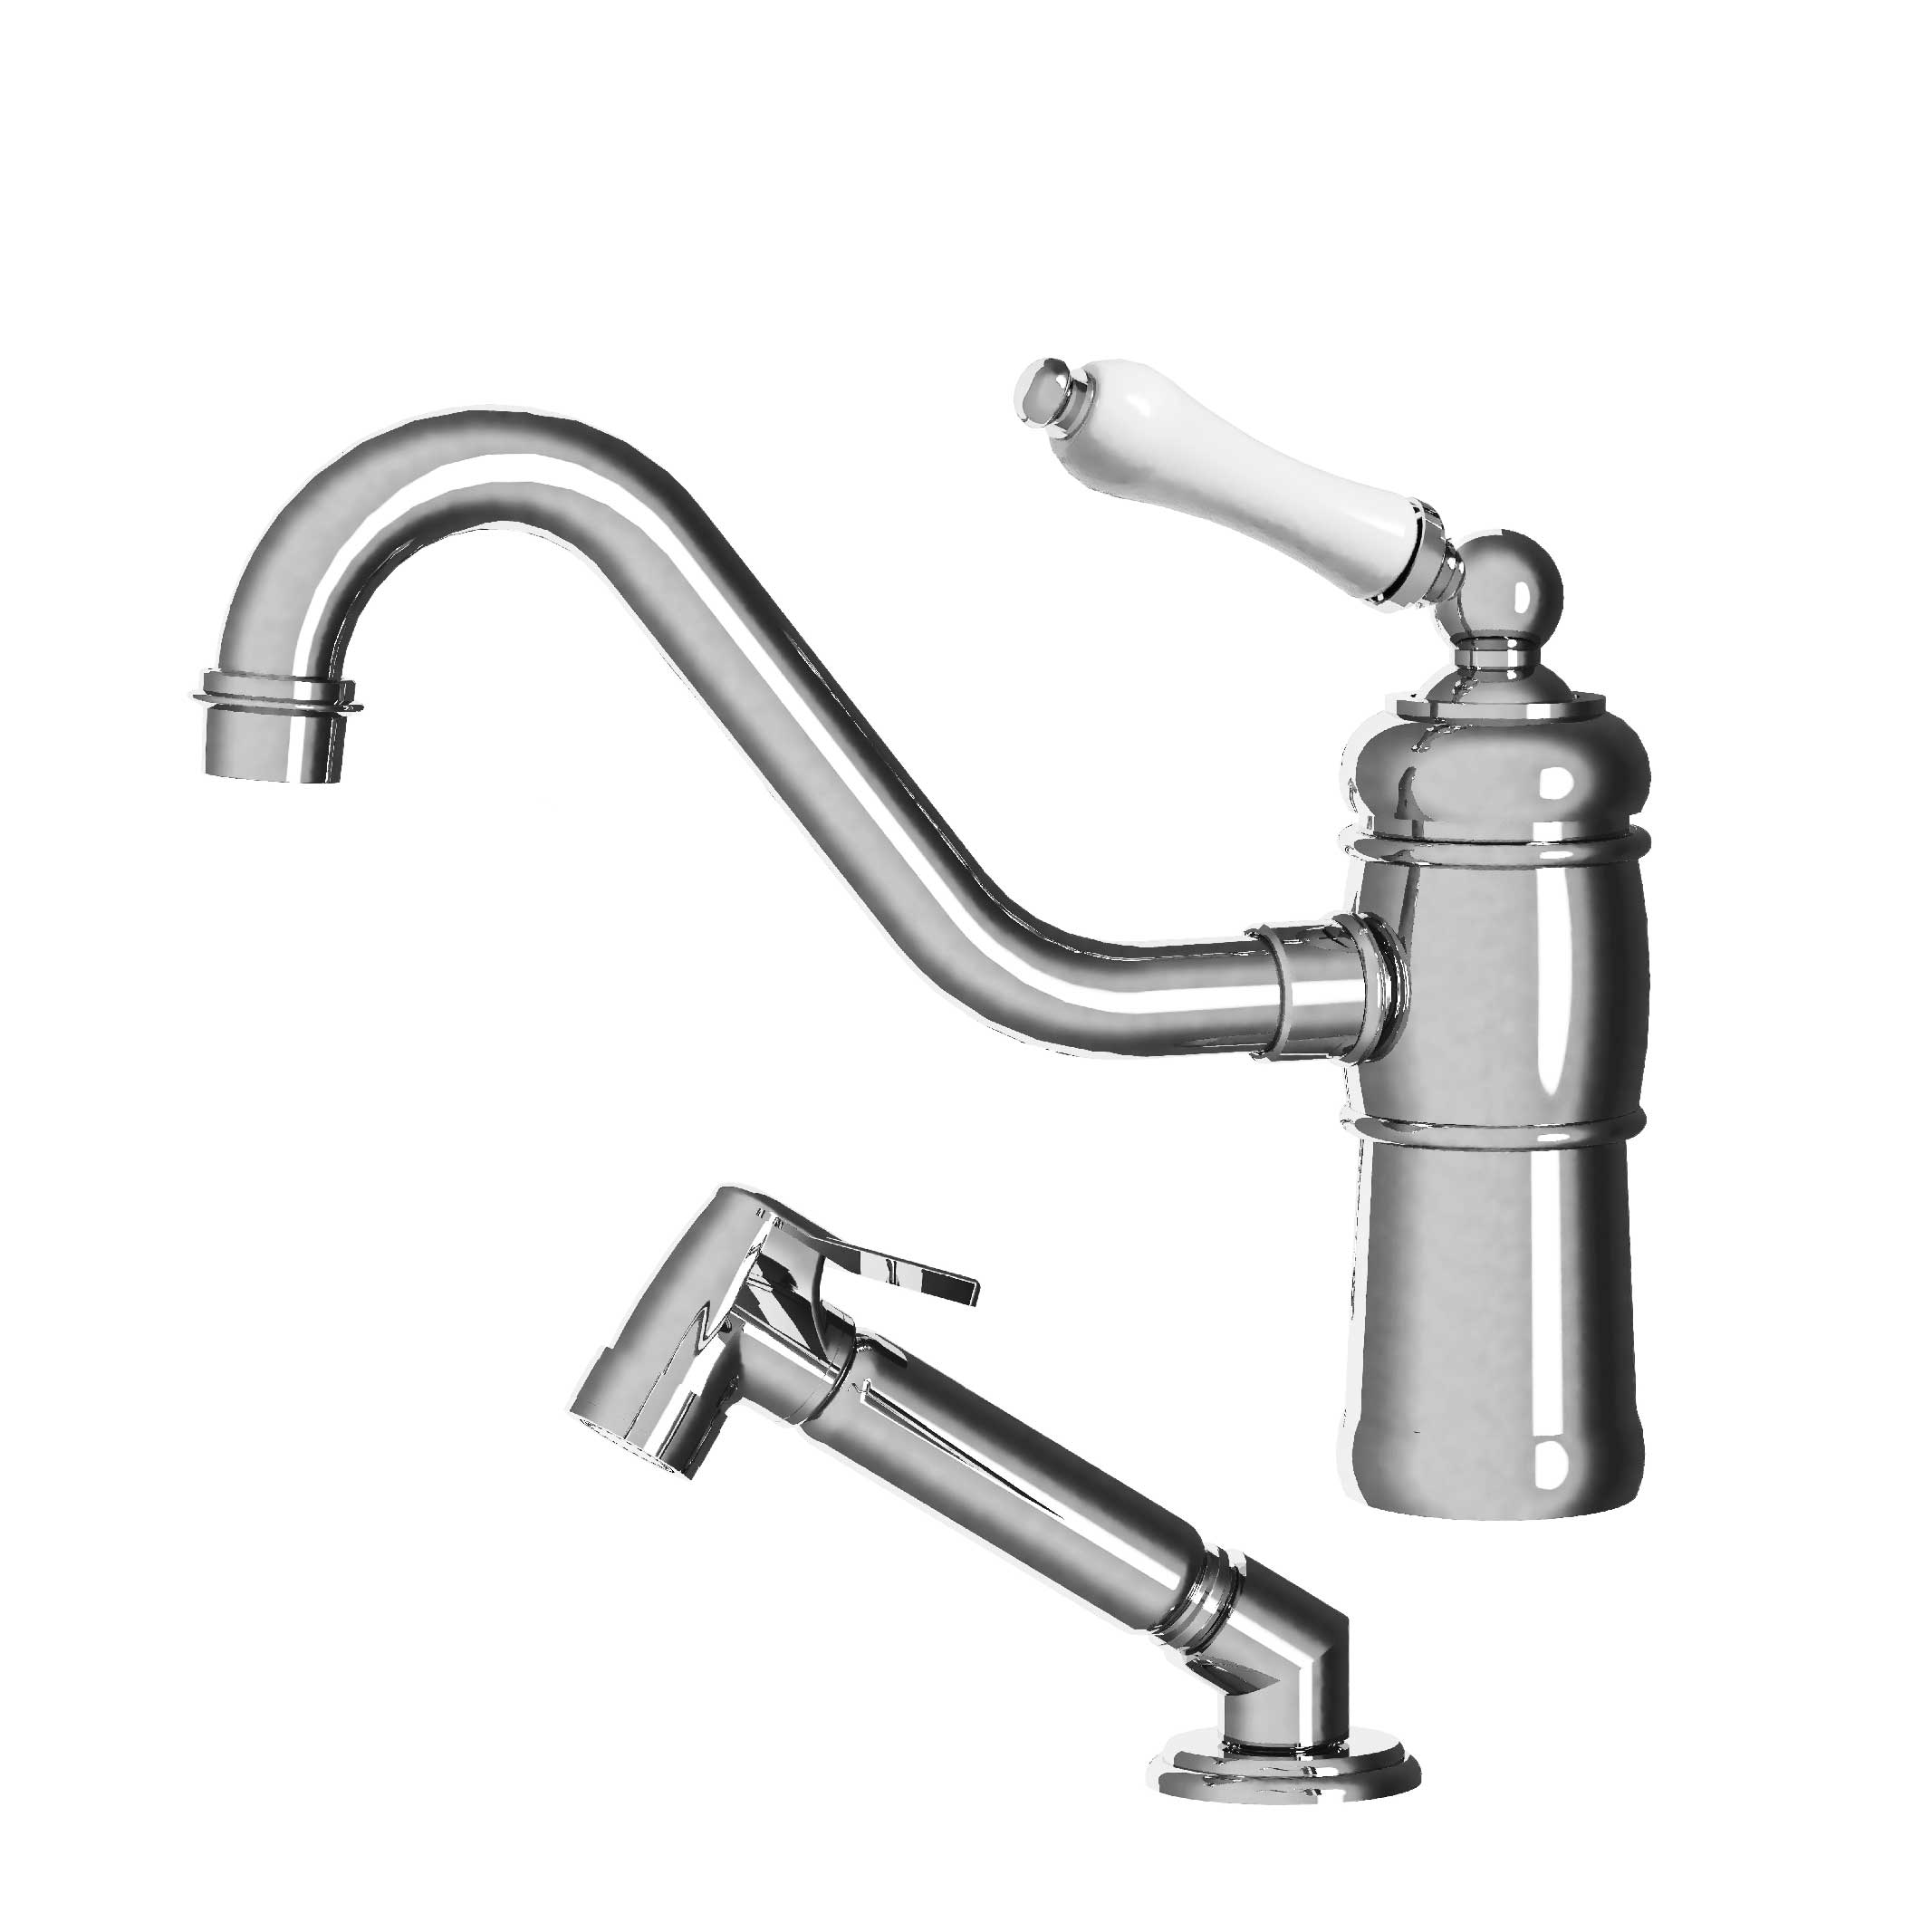 MK04-1101MS Single-hole kitchen lever mixer & handspray